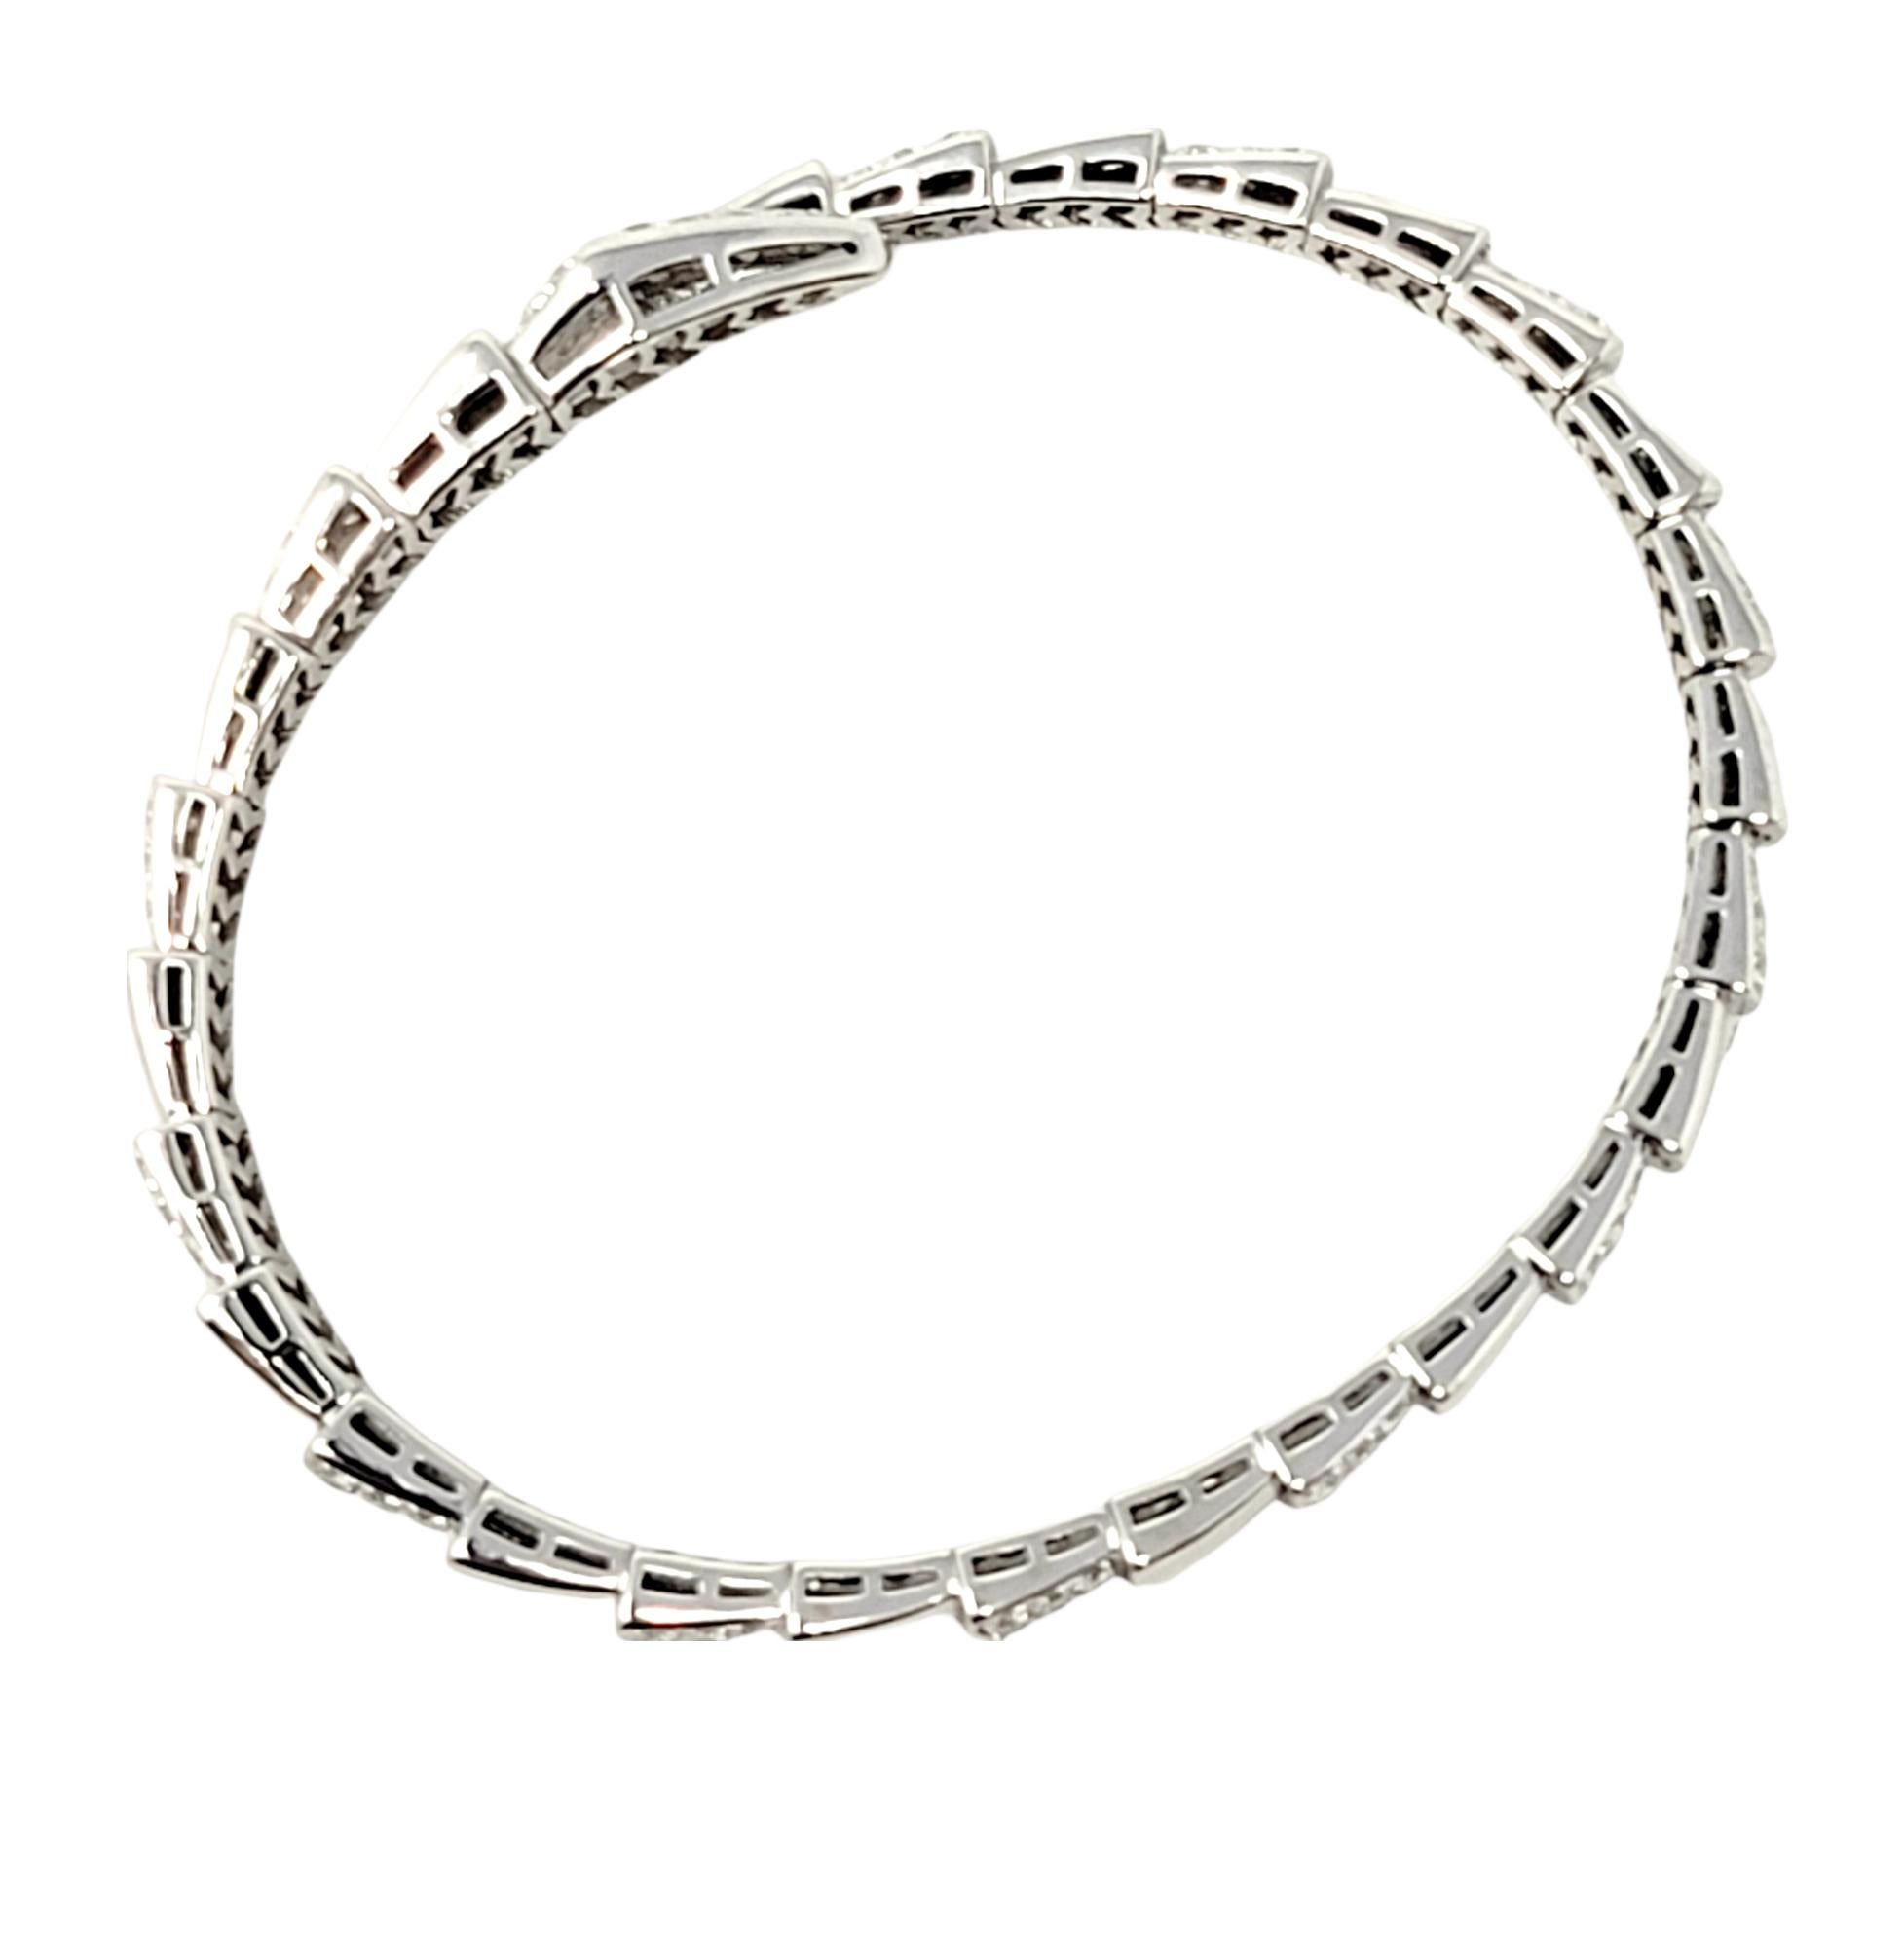 Contemporary Pave Diamond and White Gold Snake Motif Flexible Bypass Bangle Bracelet